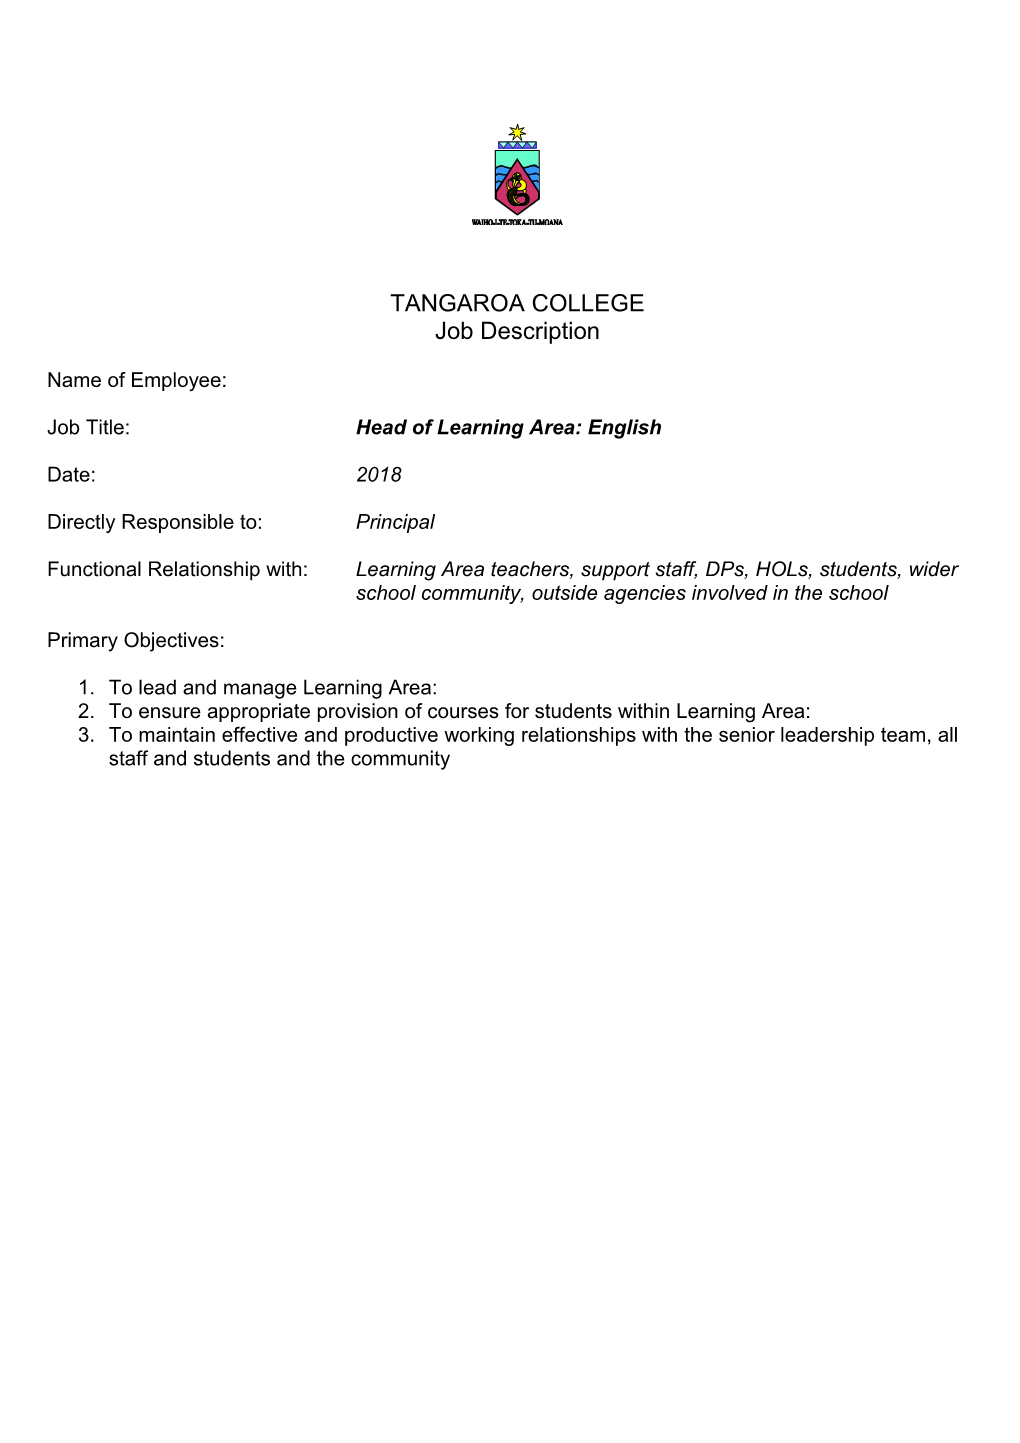 Job Title: Head of Learning Area: English